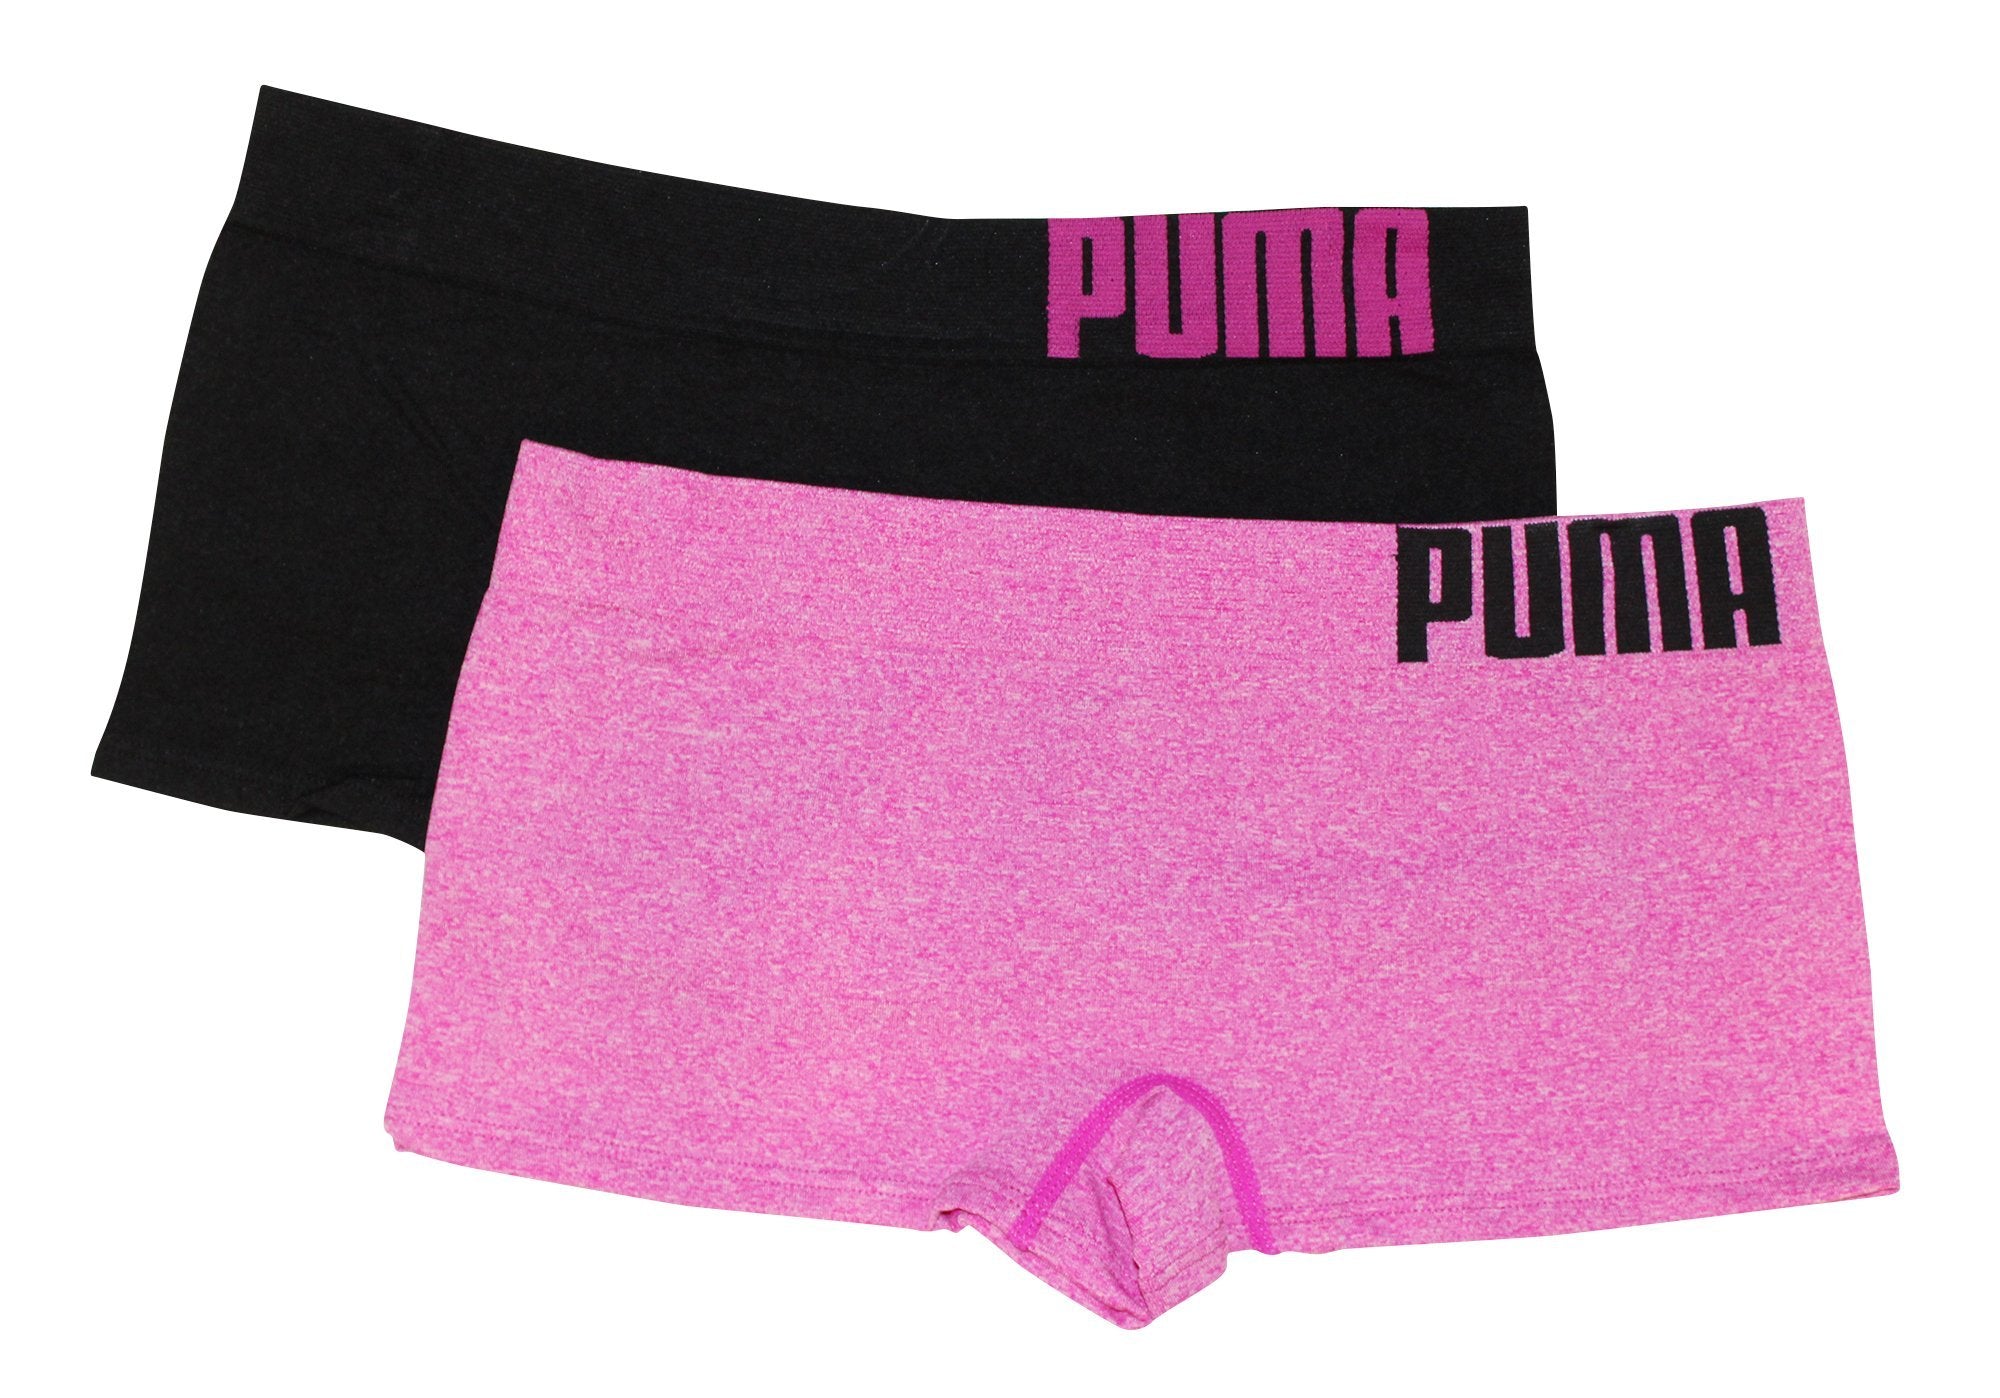 Puma 100001012 Seamless Hipster Panties 2 Units Pink